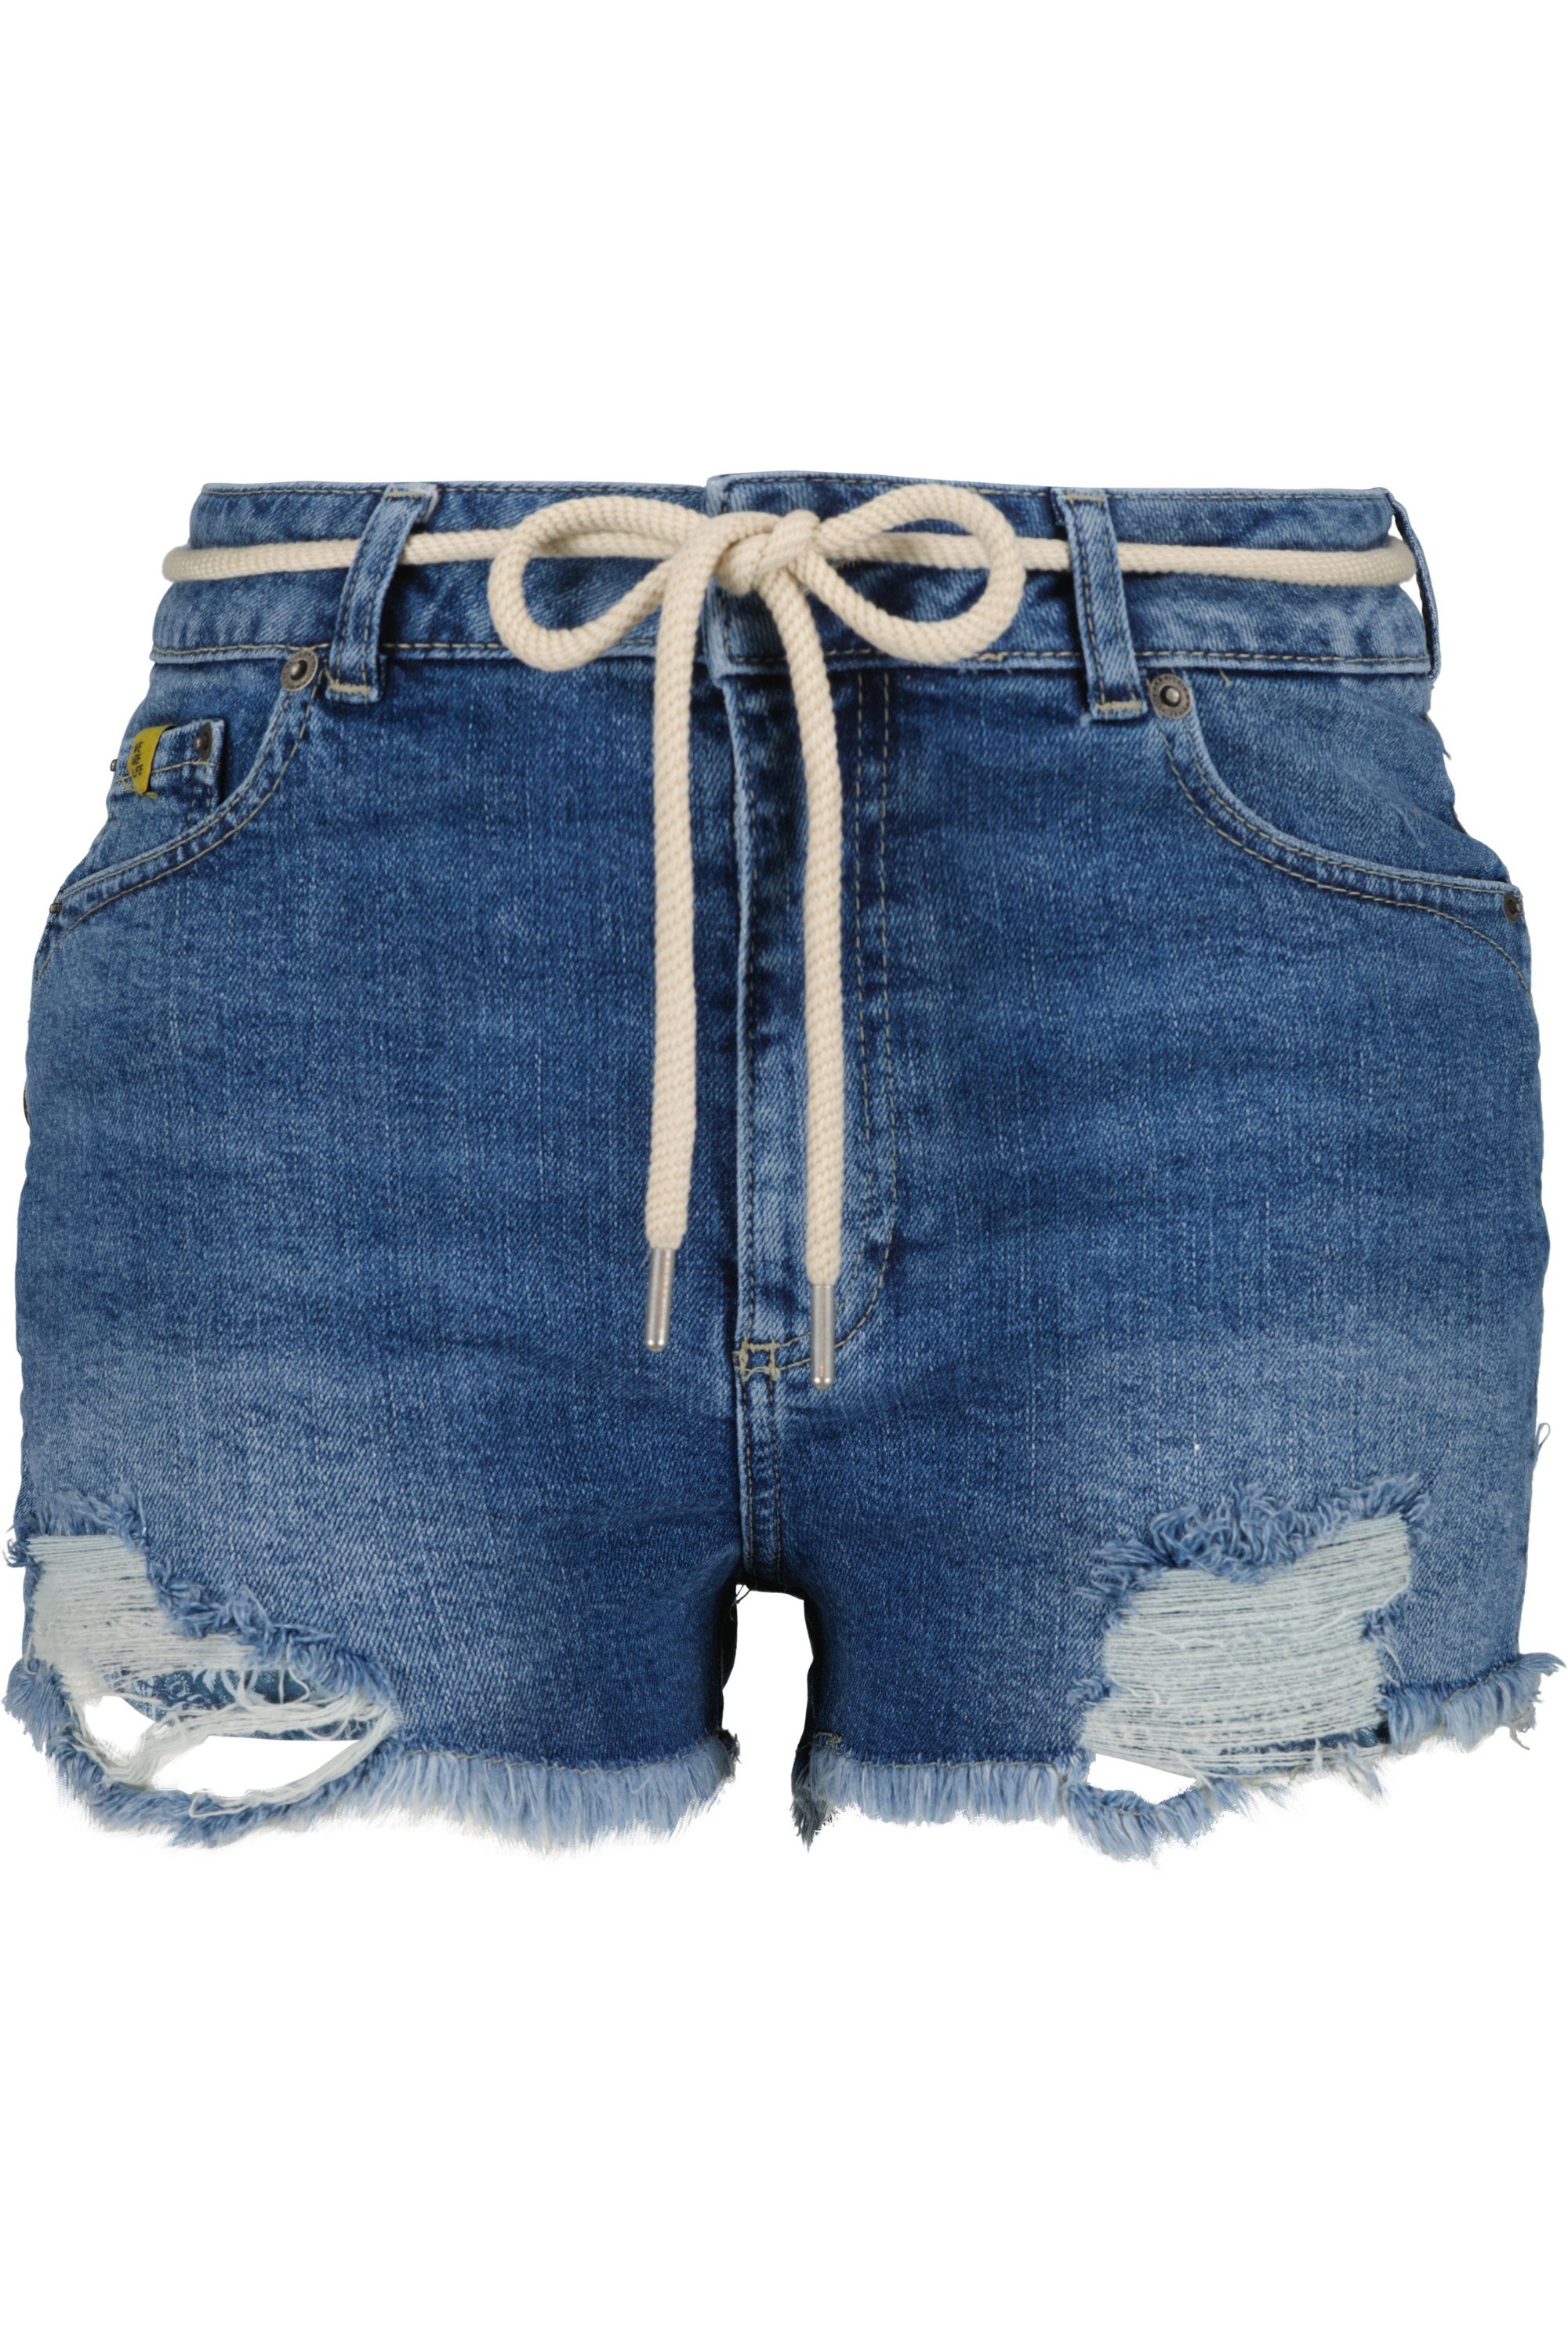 Alife & Kickin washed Jeansshorts, A denim Shorts DNM LatoyaAK Damen Hose dark kurze Shorts